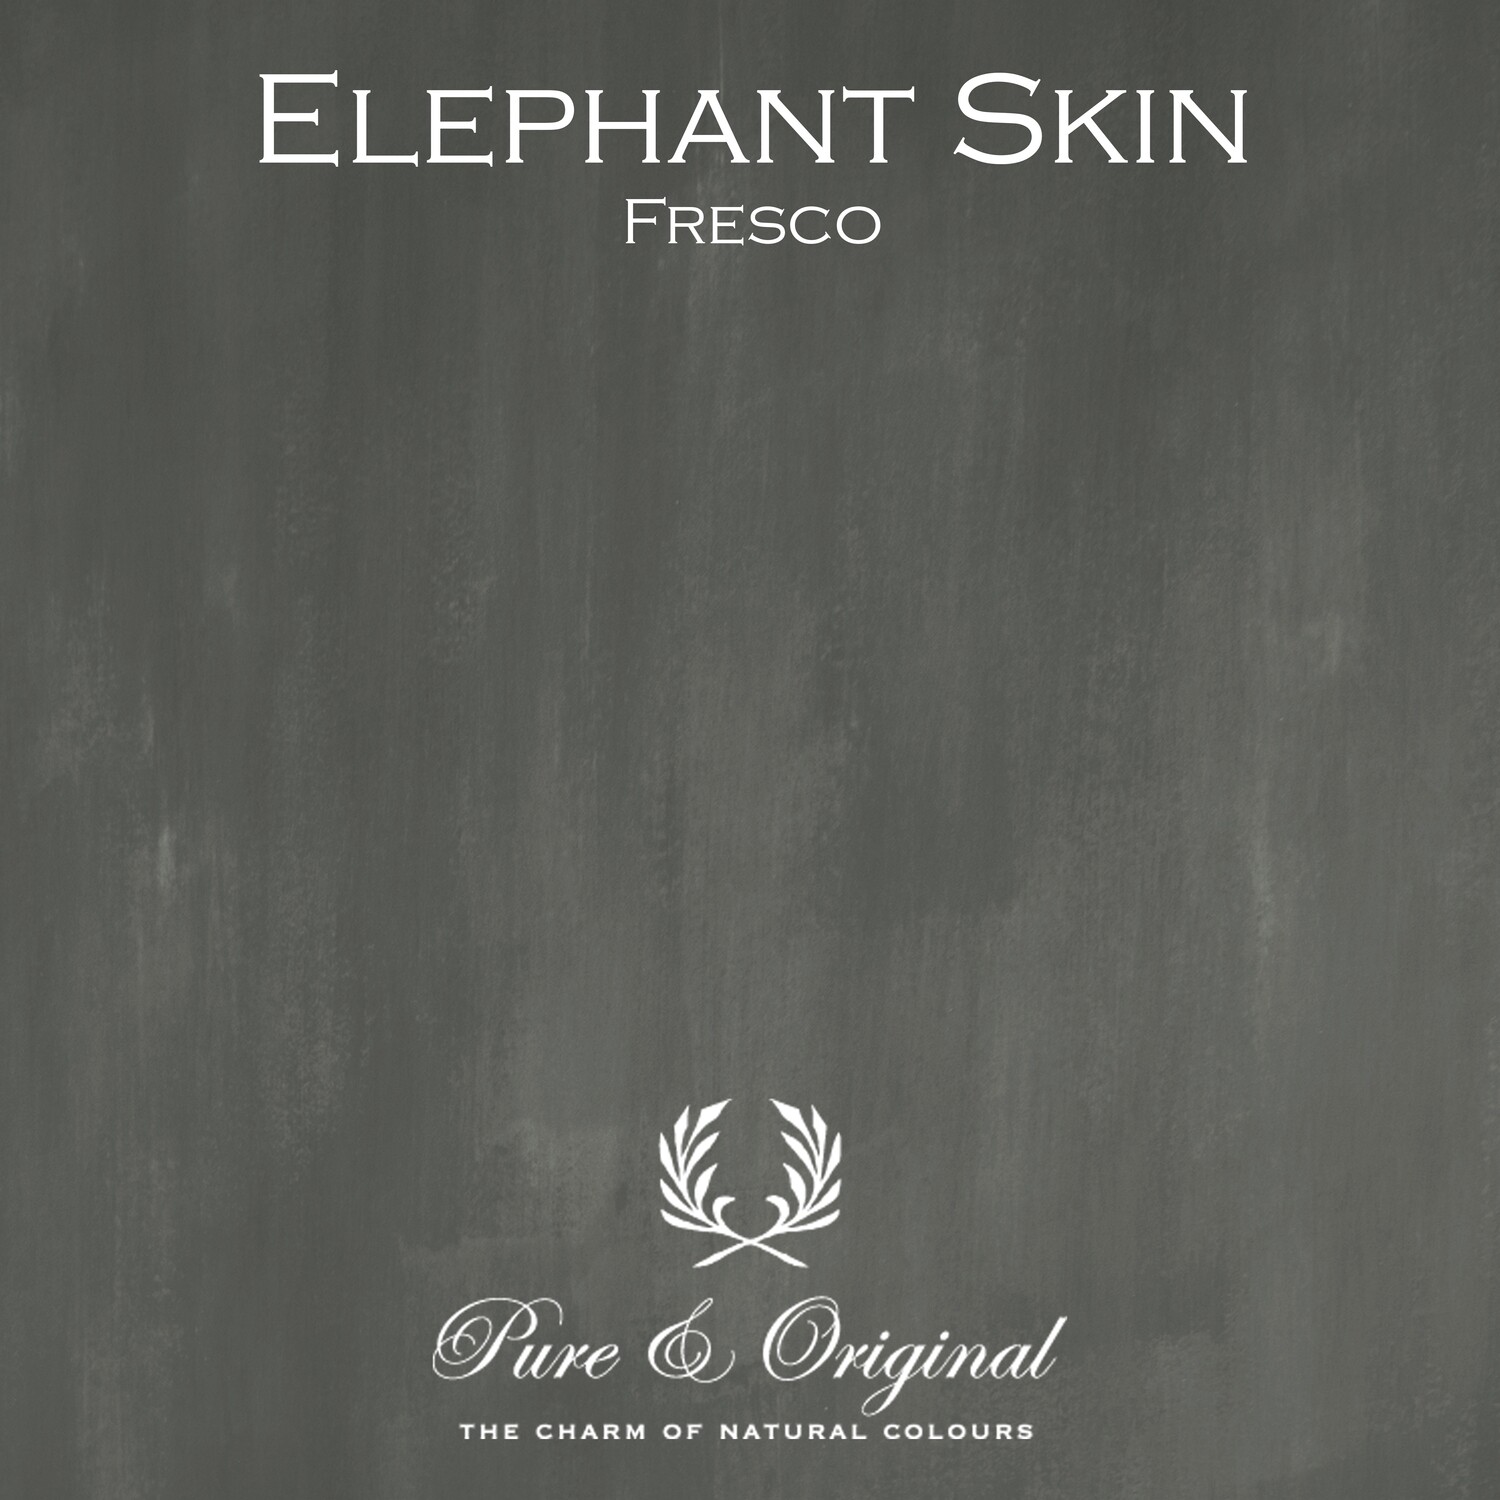 Elephant Skin Fresco